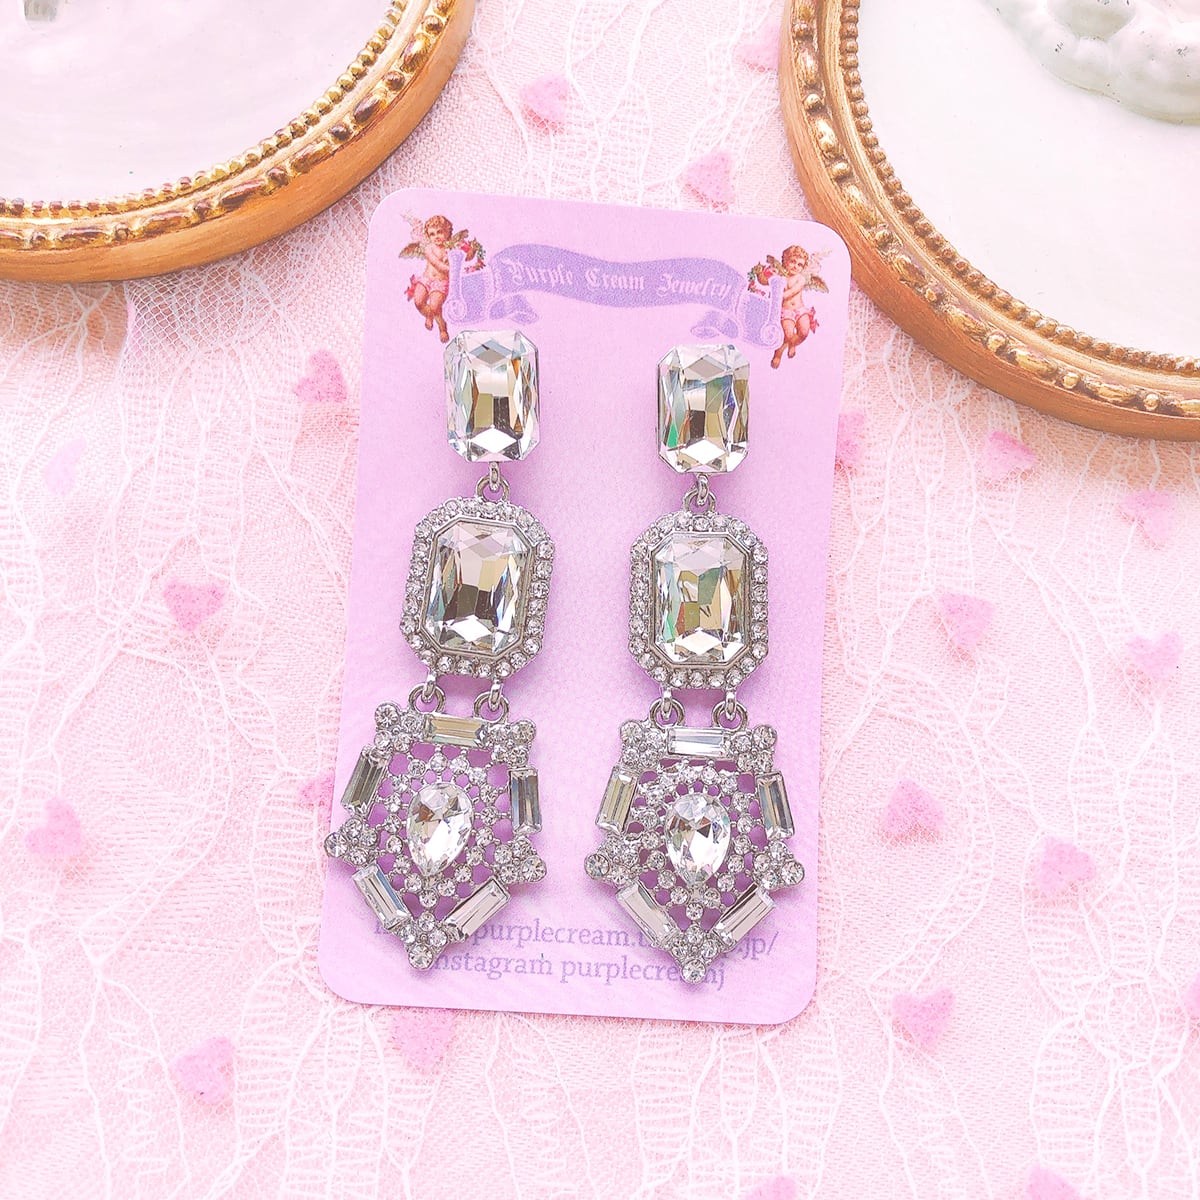 Purple Cream Bijou Earrings P559 IZ*ONE Miyawaki Sakura wearing earrings